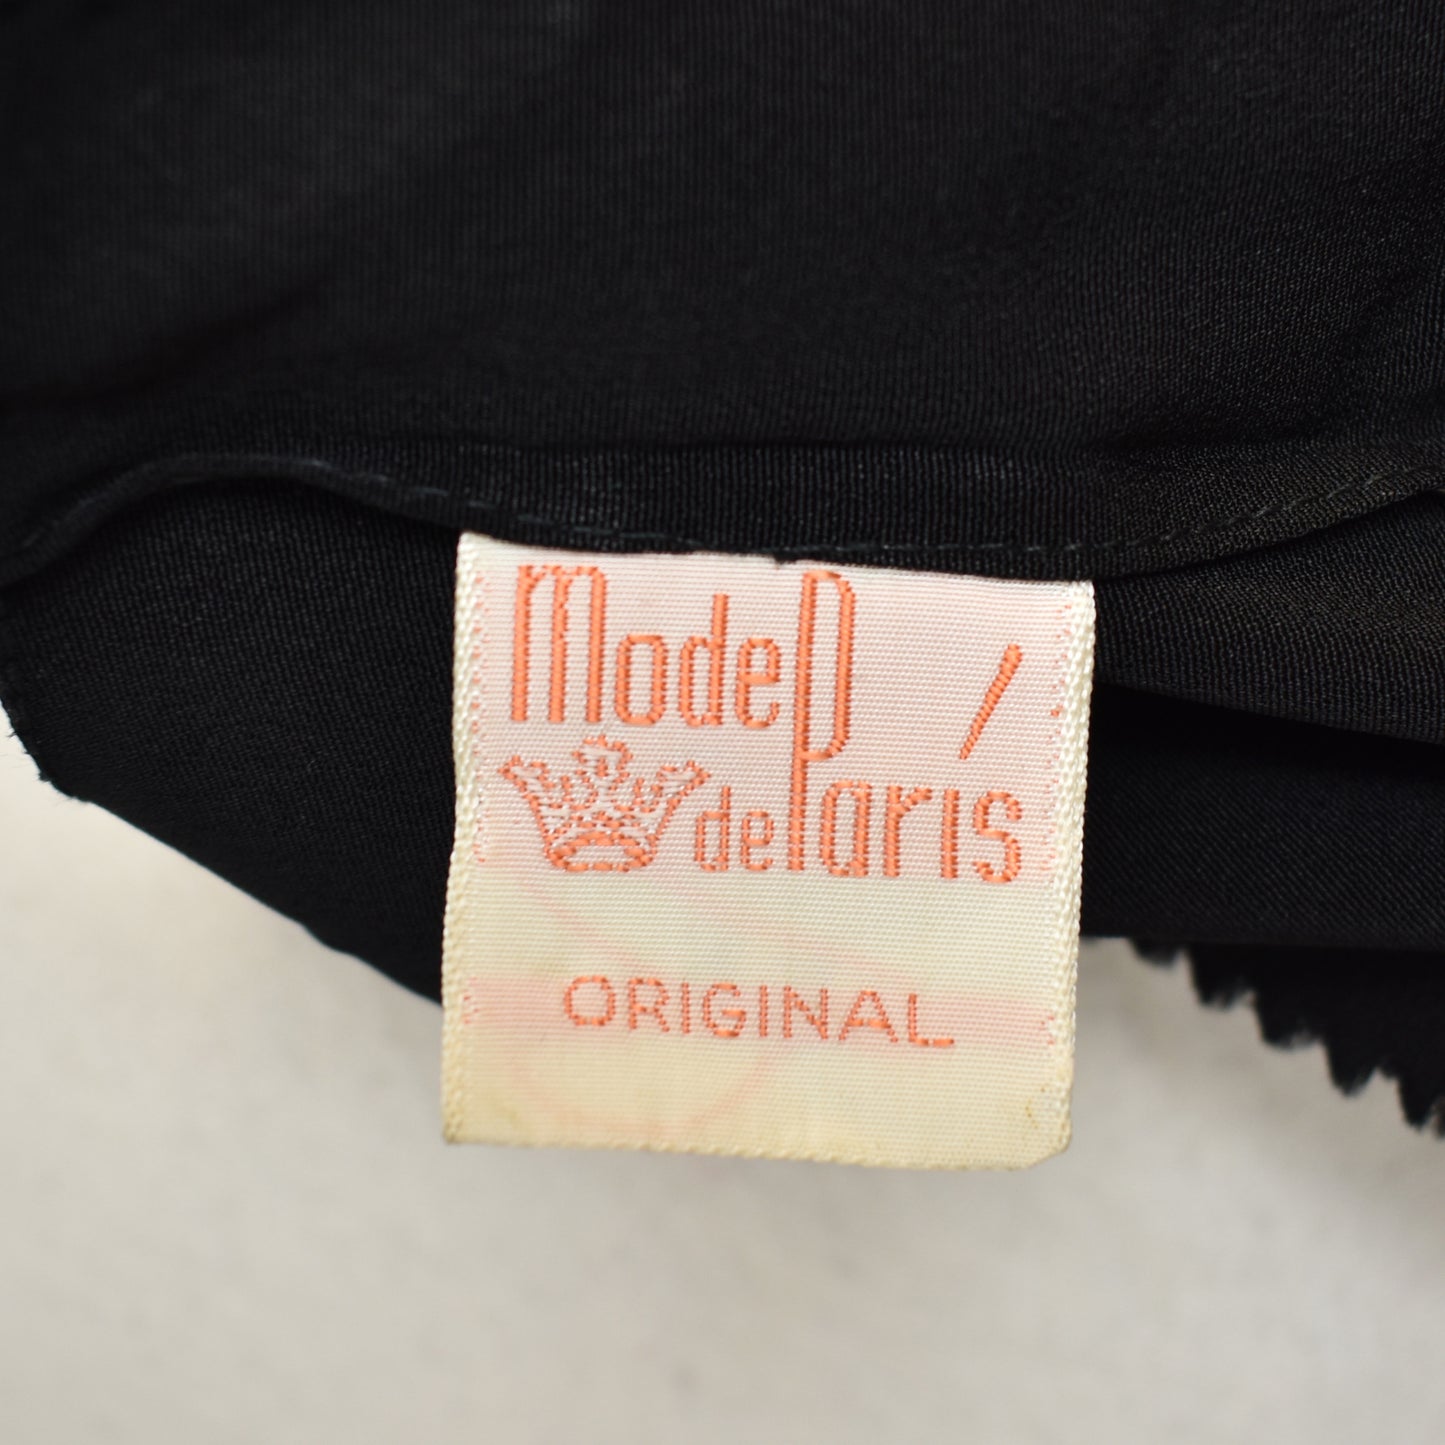 Vintage 40s Blouse - Mode de Paris Brand - Beautiful Condition - Incredible Detail on Neckline - Full Sleeve